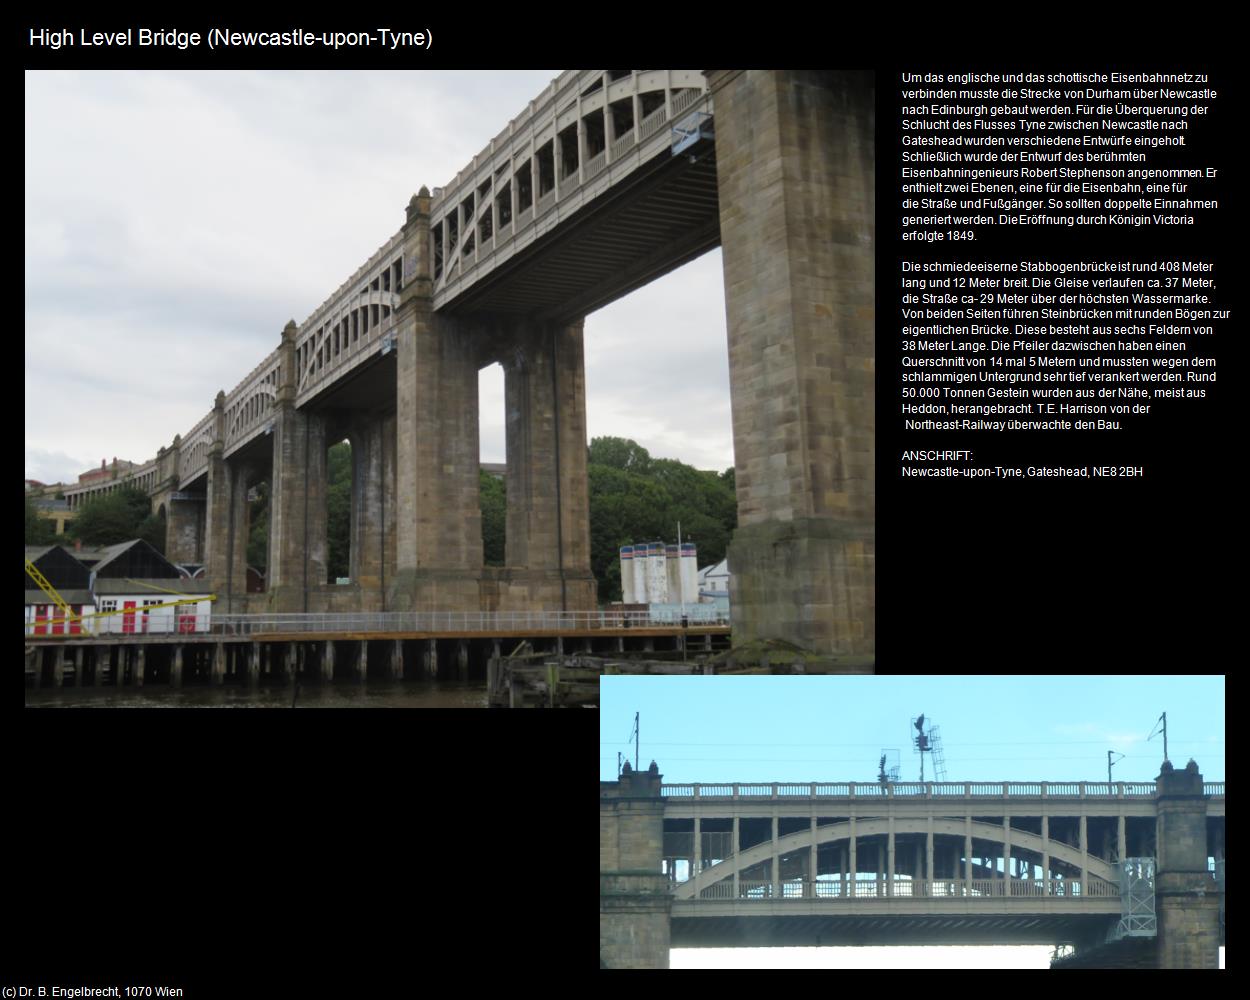 High Level Bridge  (Newcastle-upon-Tyne, England) in Kulturatlas-ENGLAND und WALES